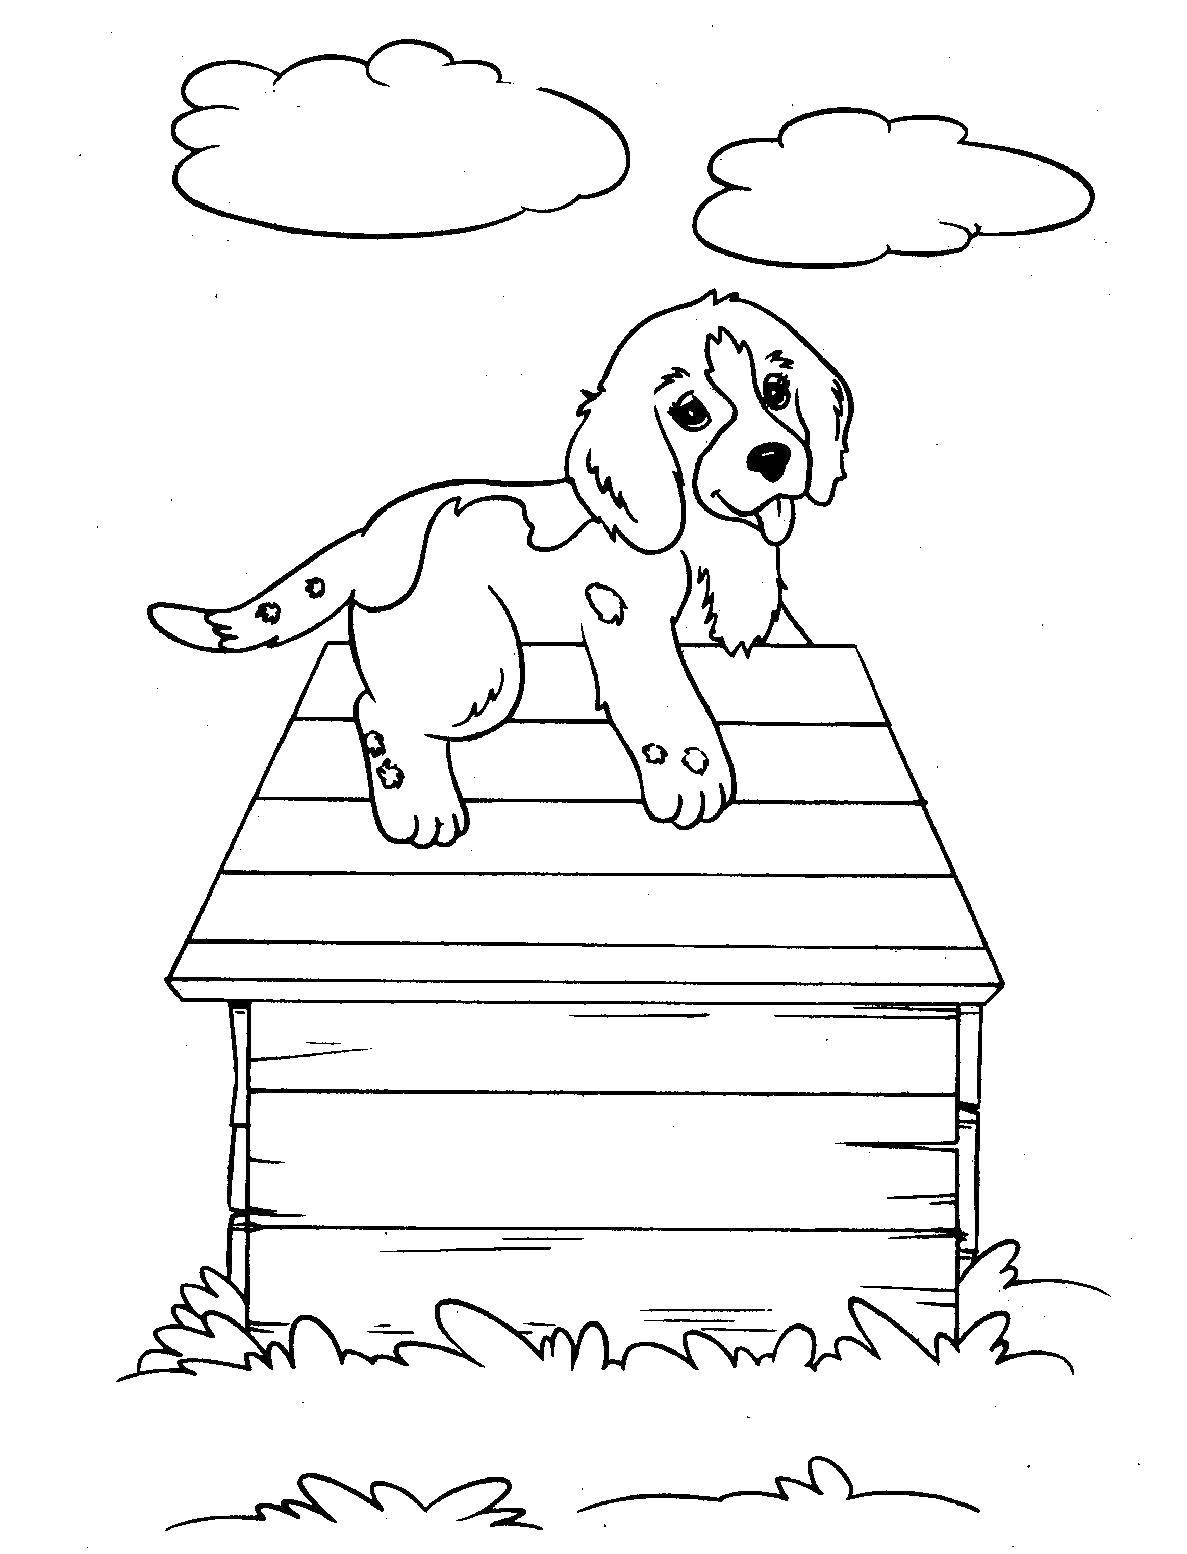 Название: Раскраска Щенок на крыше будки. Категория: собаки. Теги: собака.